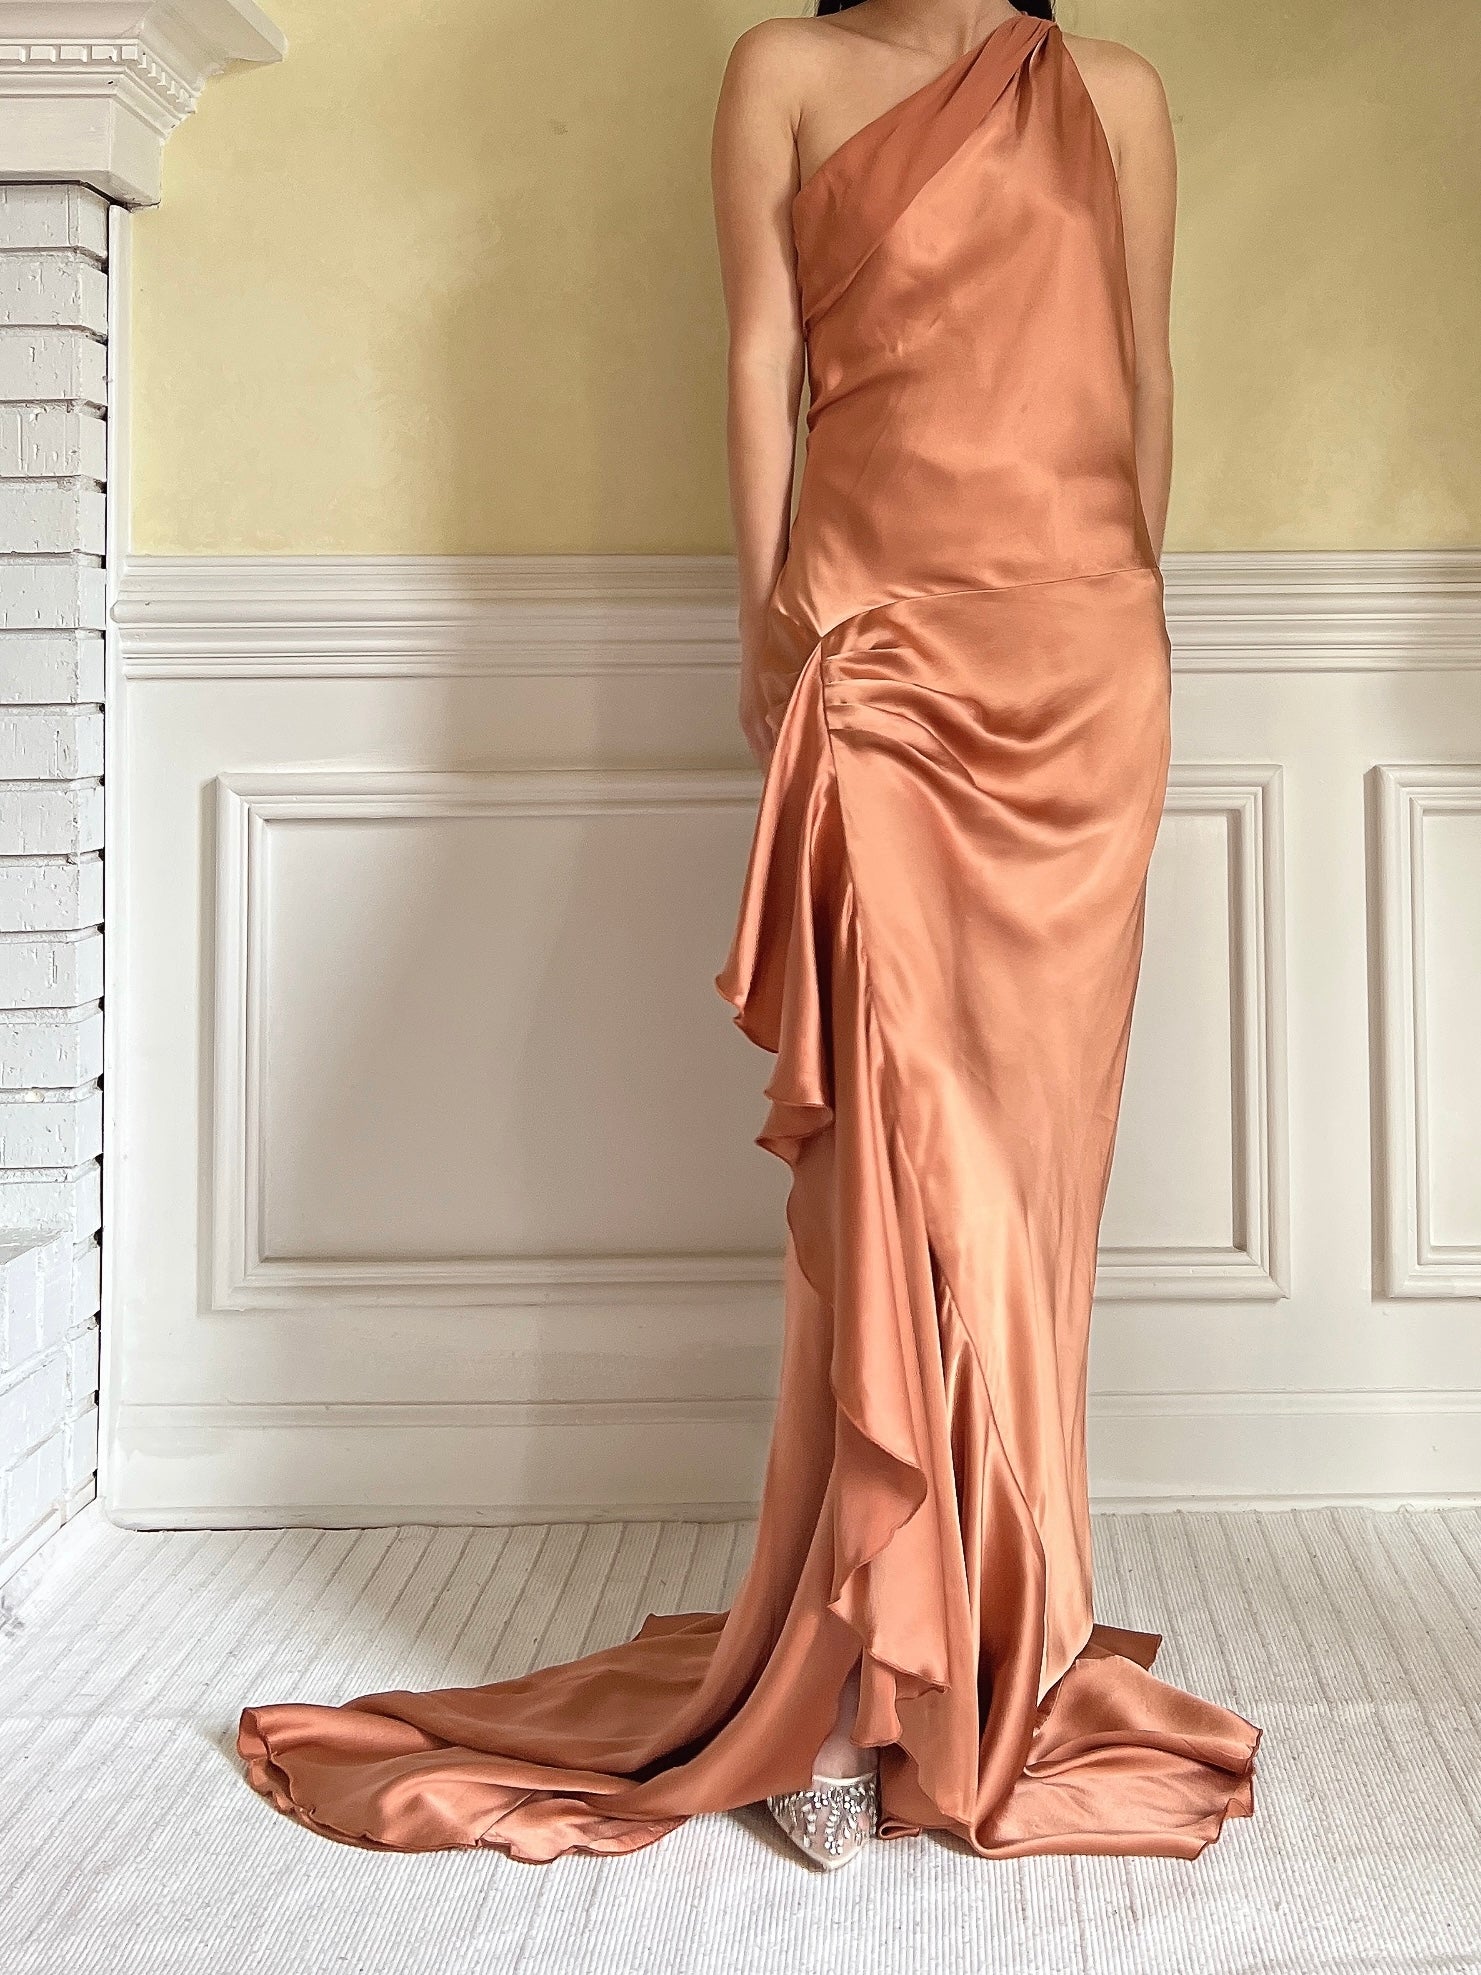 Vintage Rust Silk Charmeuse Ruffled Dress - M